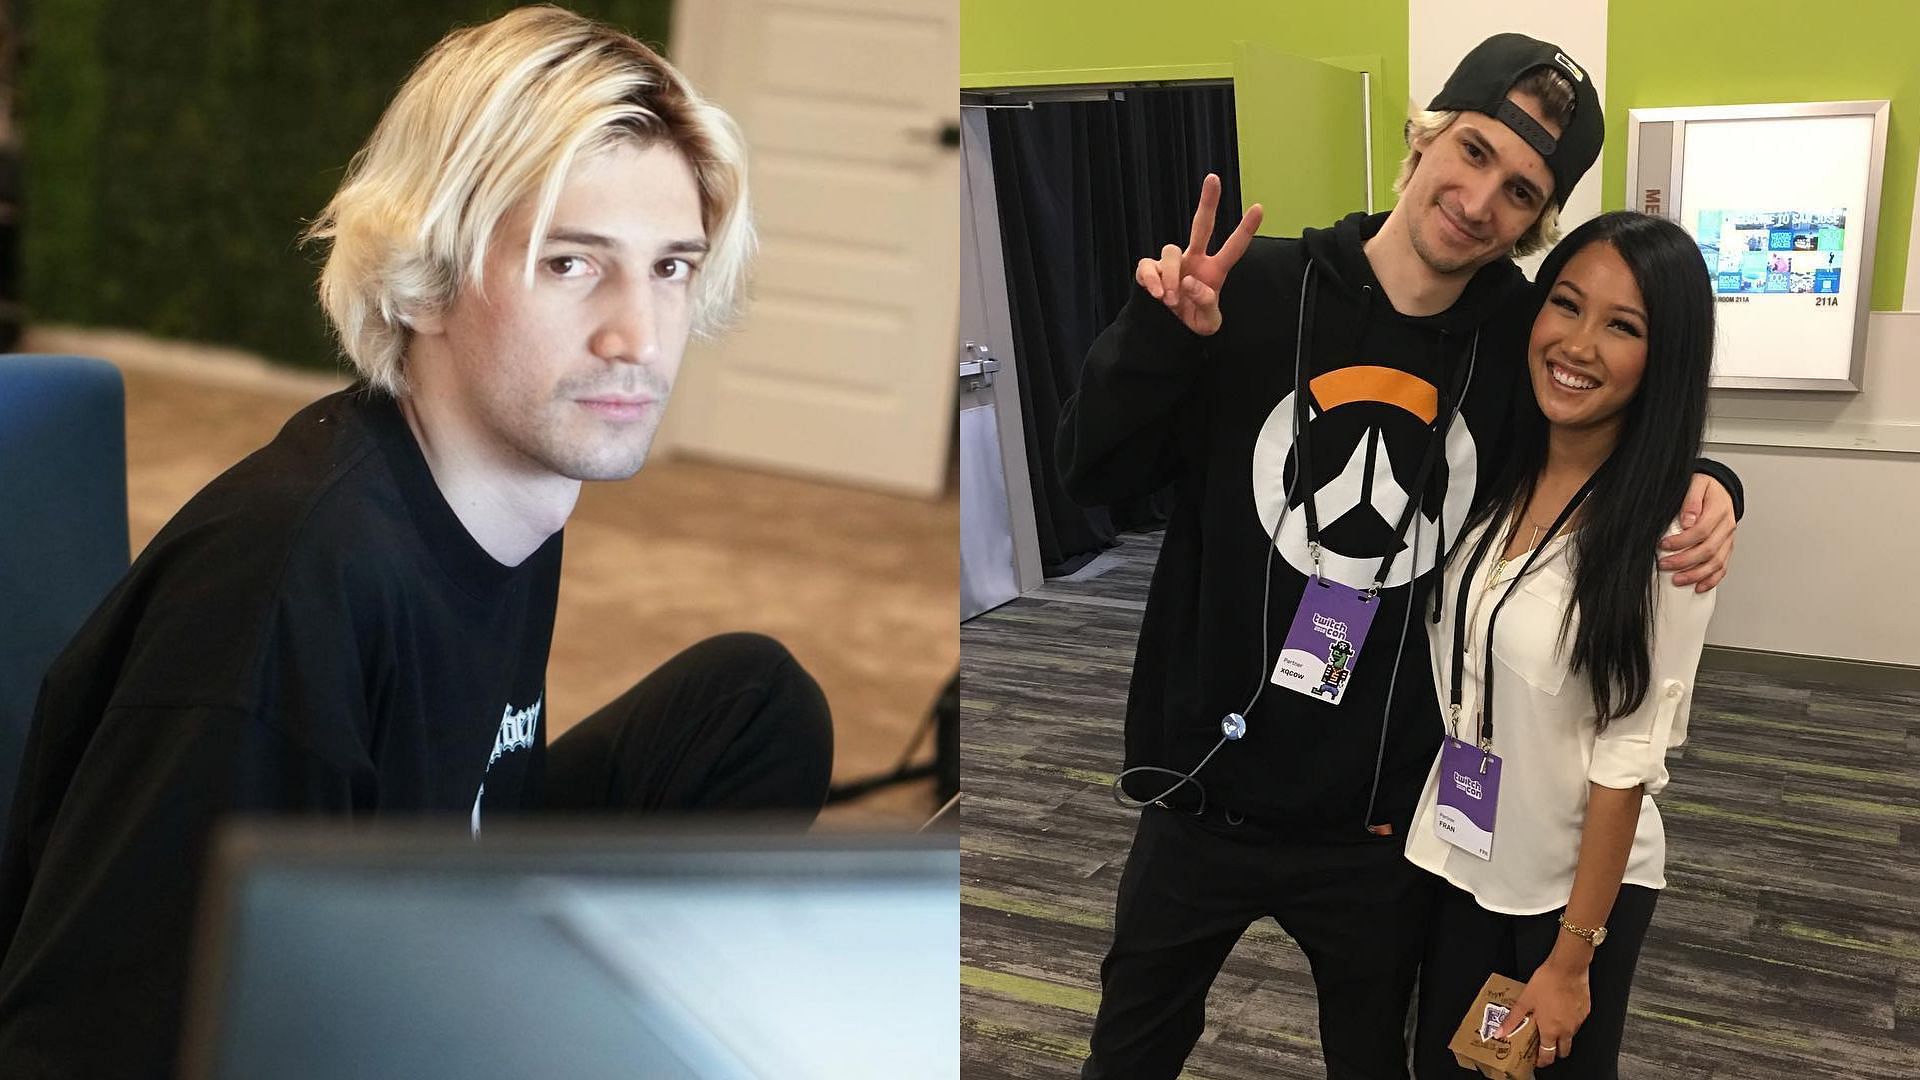 xQc has broken up fellow Twitch streamer and Overwatch creator Fran (Image via xqc, Fran/Instagram)